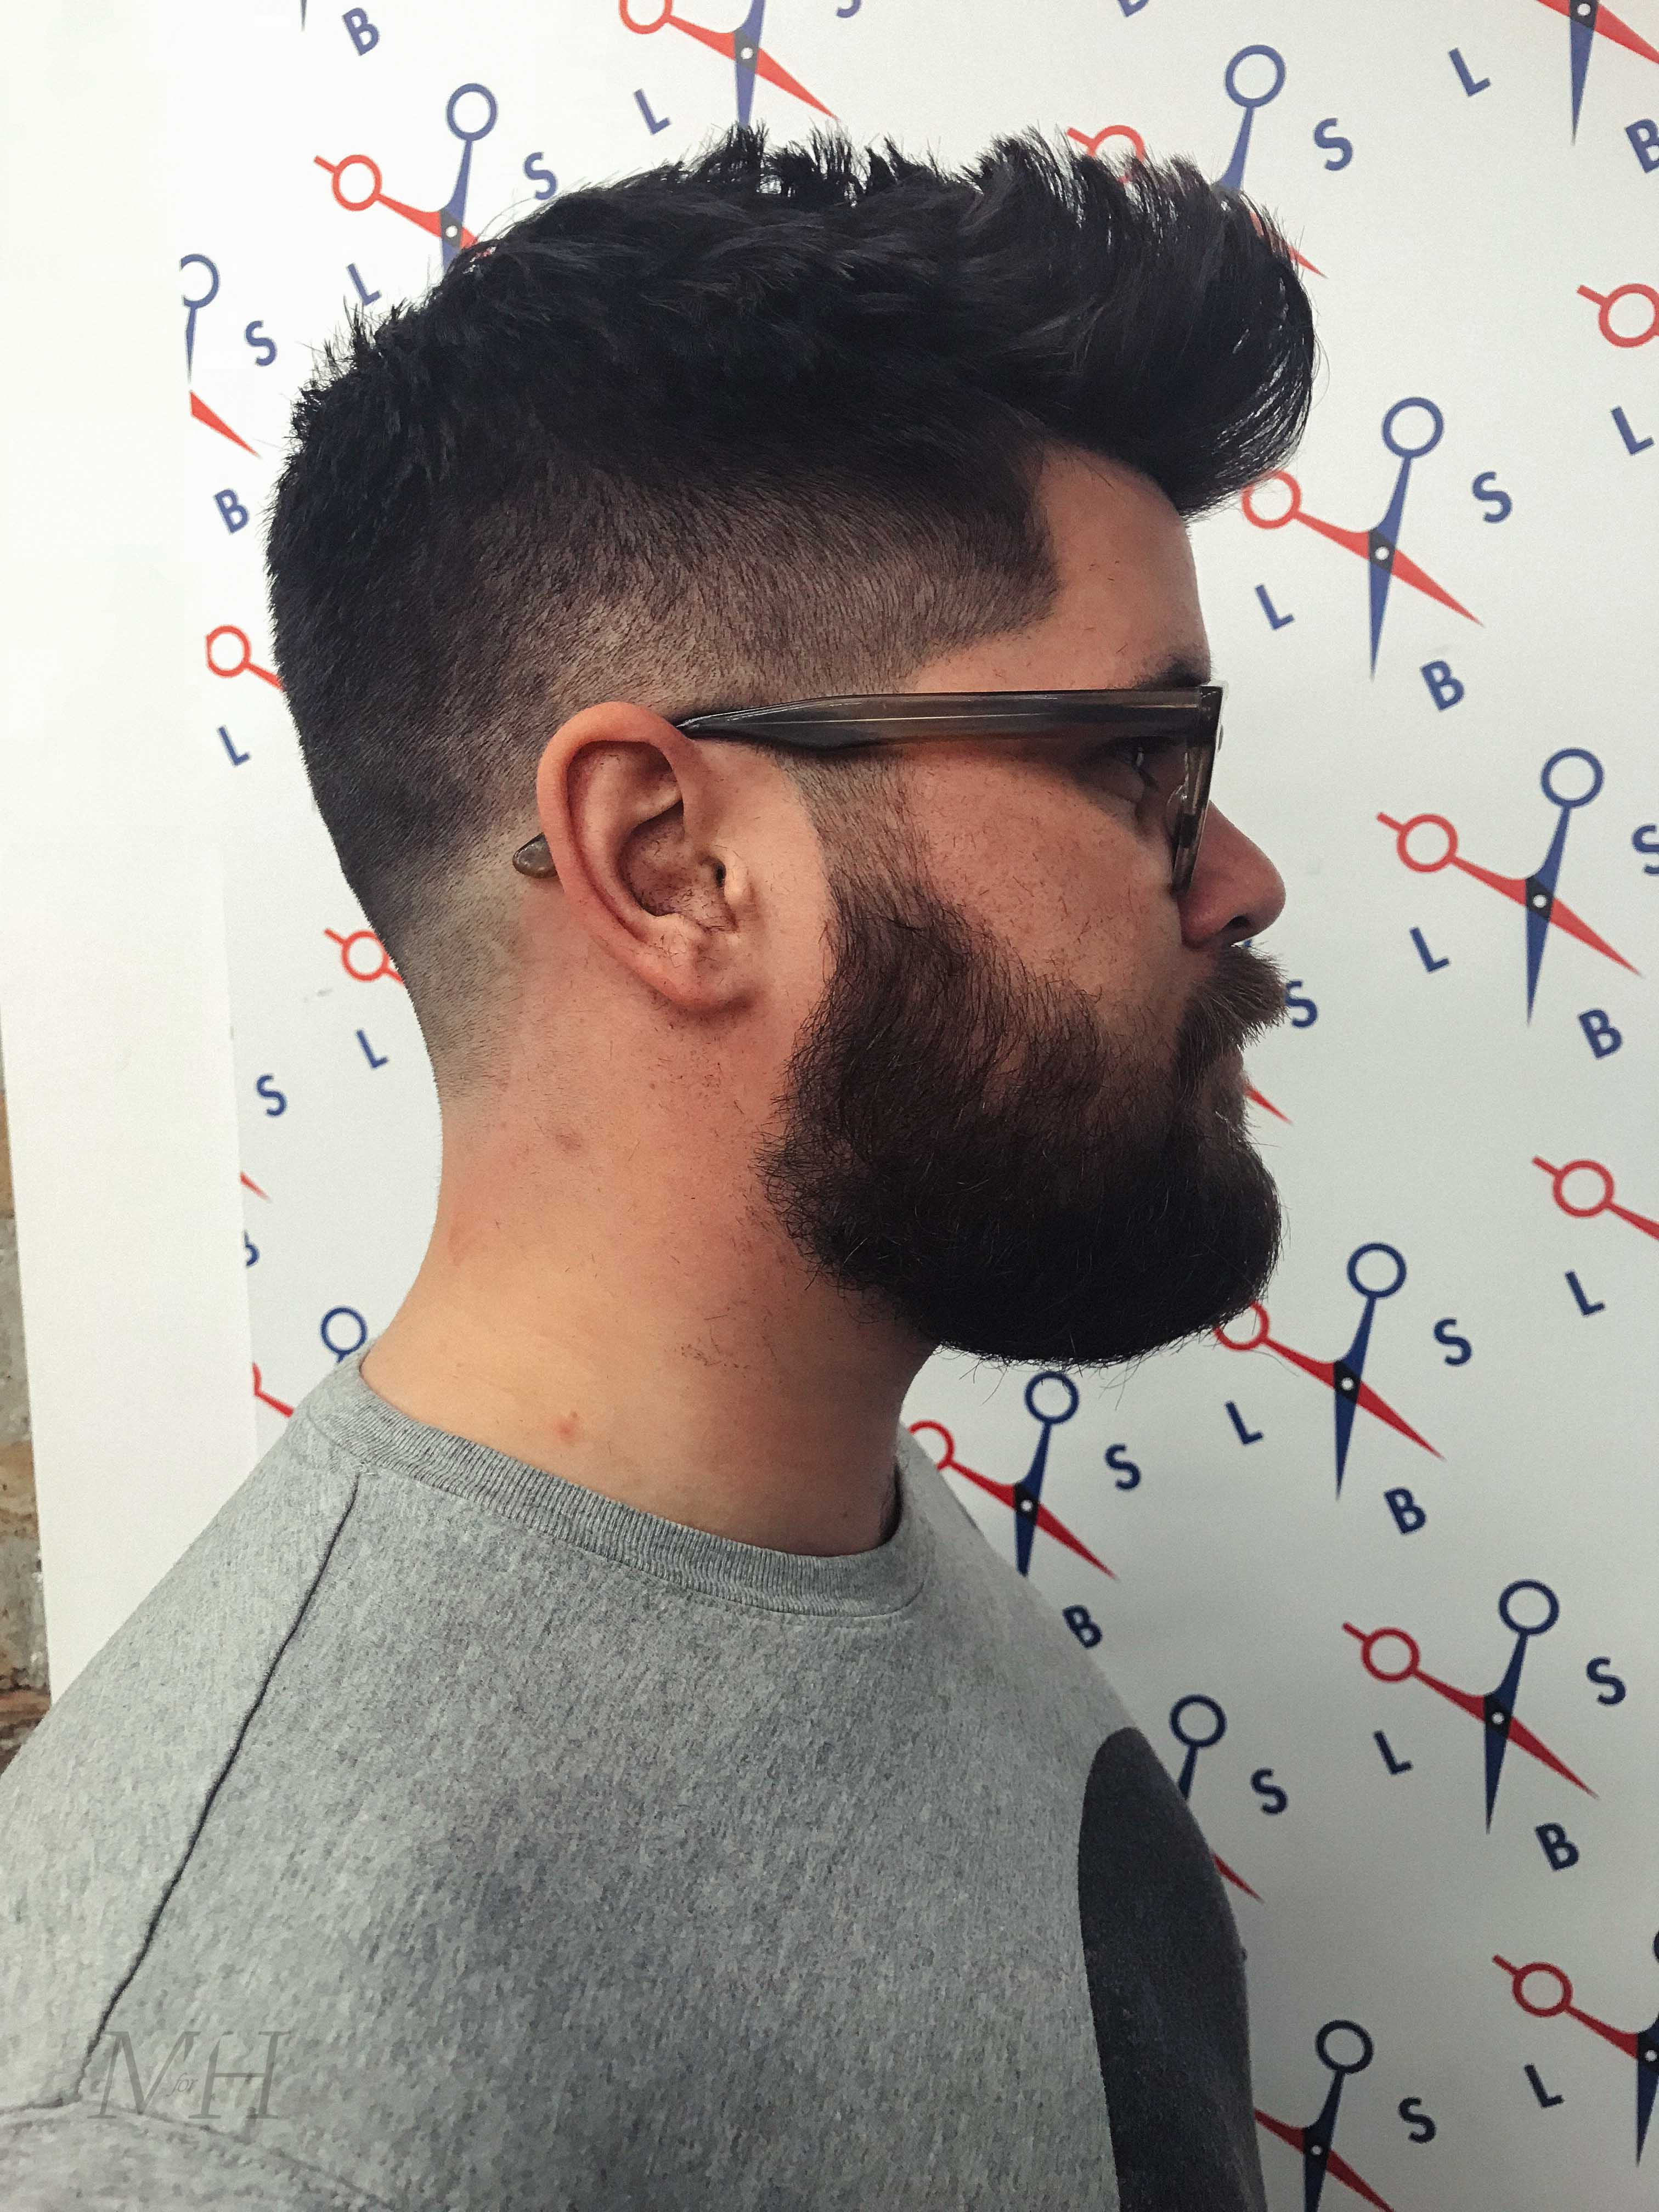 Robin-James-Man-For-Himself-Barber-Haircut-Cuts-8